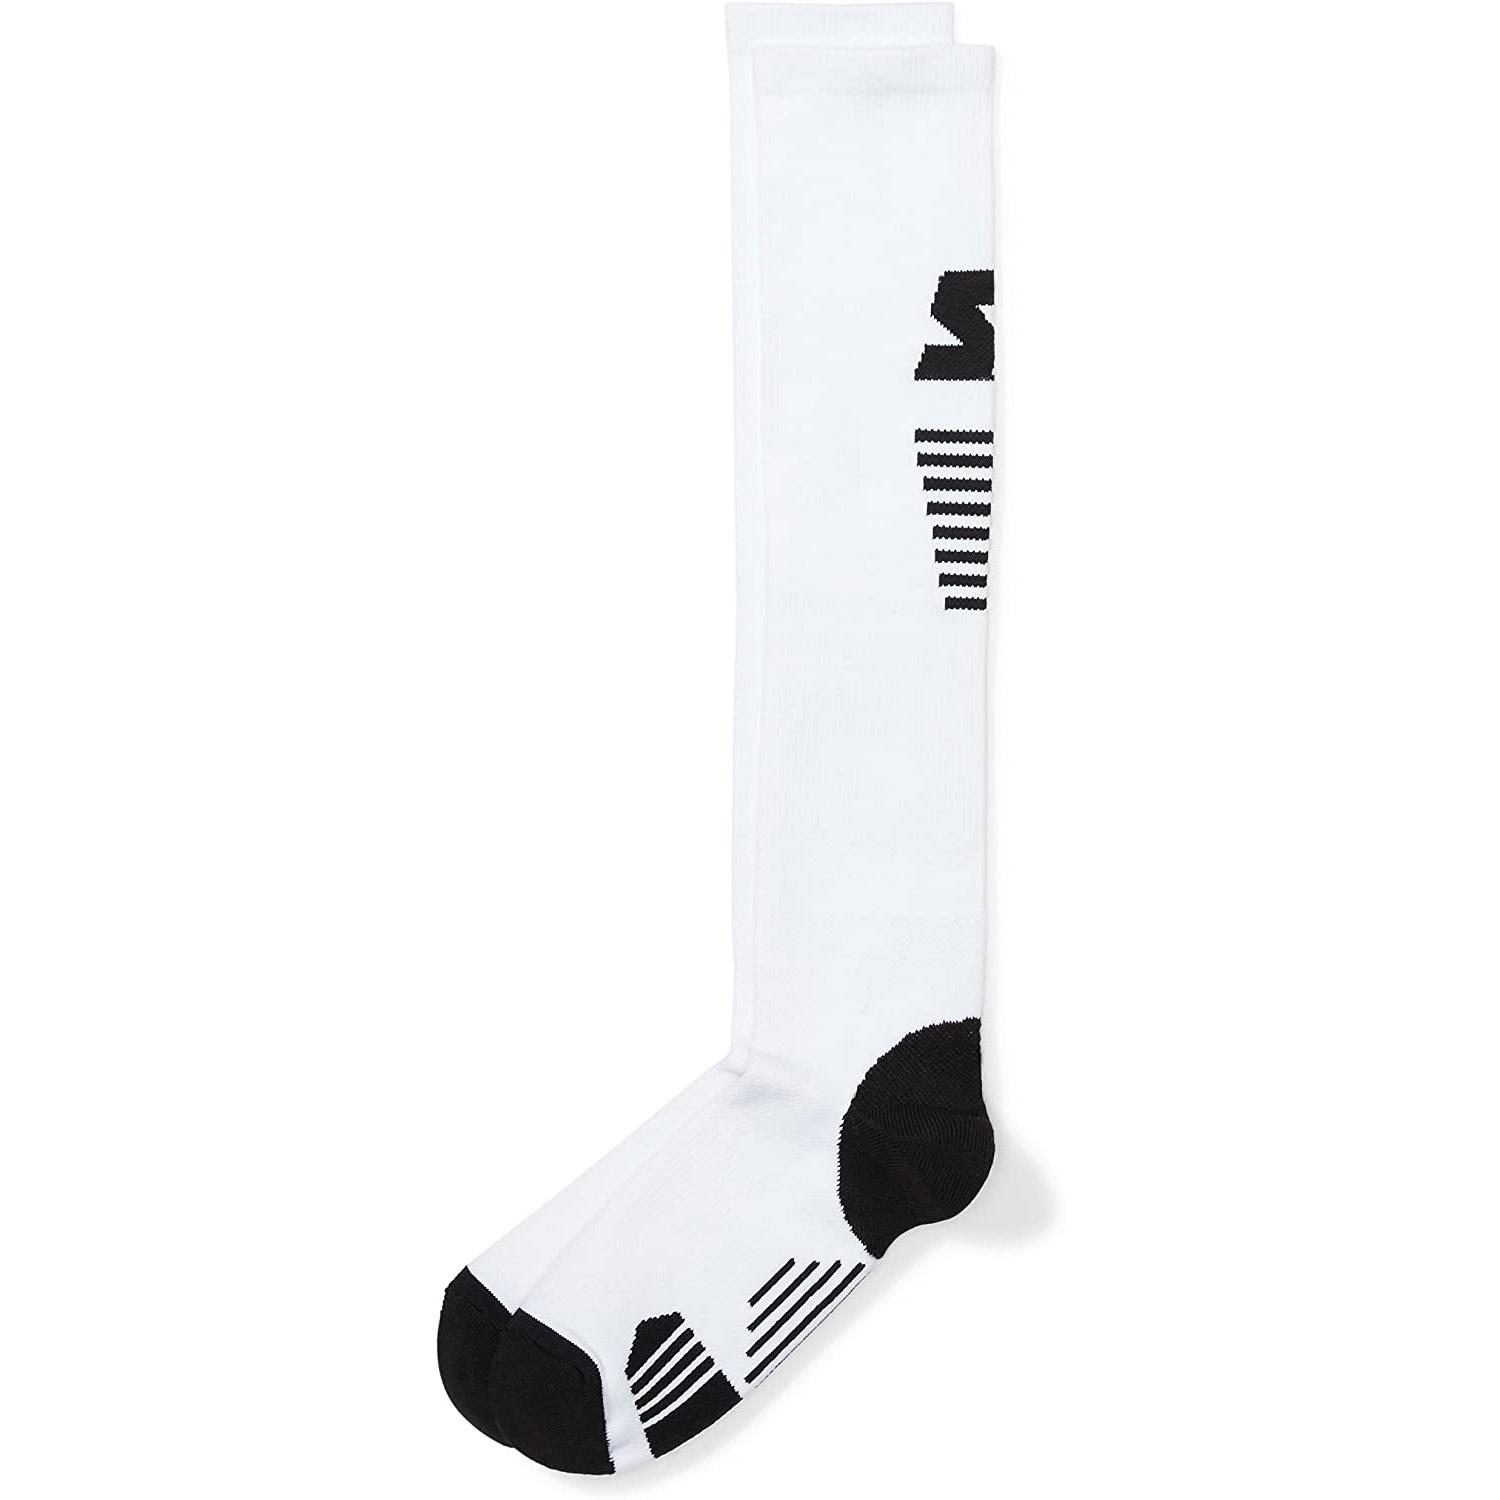 Starter Womens Compression Socks for $2.50